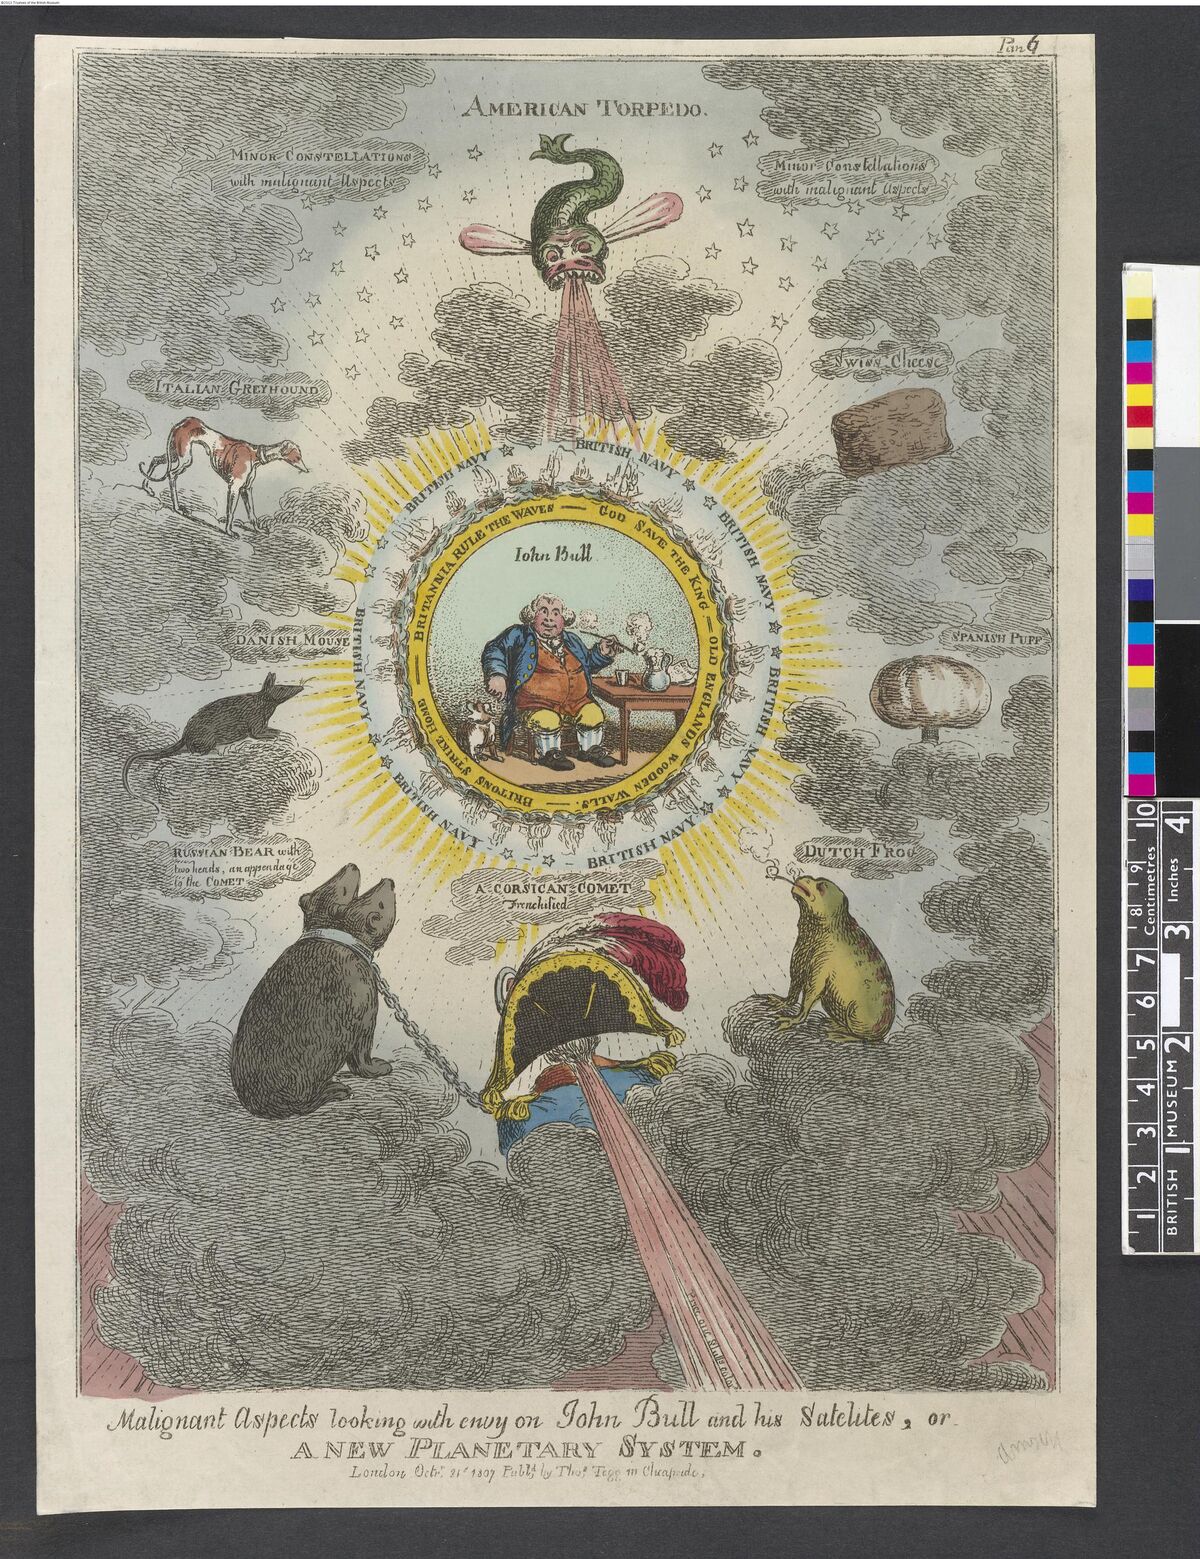 GFD 3/137: «Malignant aspects looking with envy on John Bull and his satelites, or a new planetary system», satirische Zeichnung über die Kontinentalsperre (Karikatur von Charles Williams, 1807)